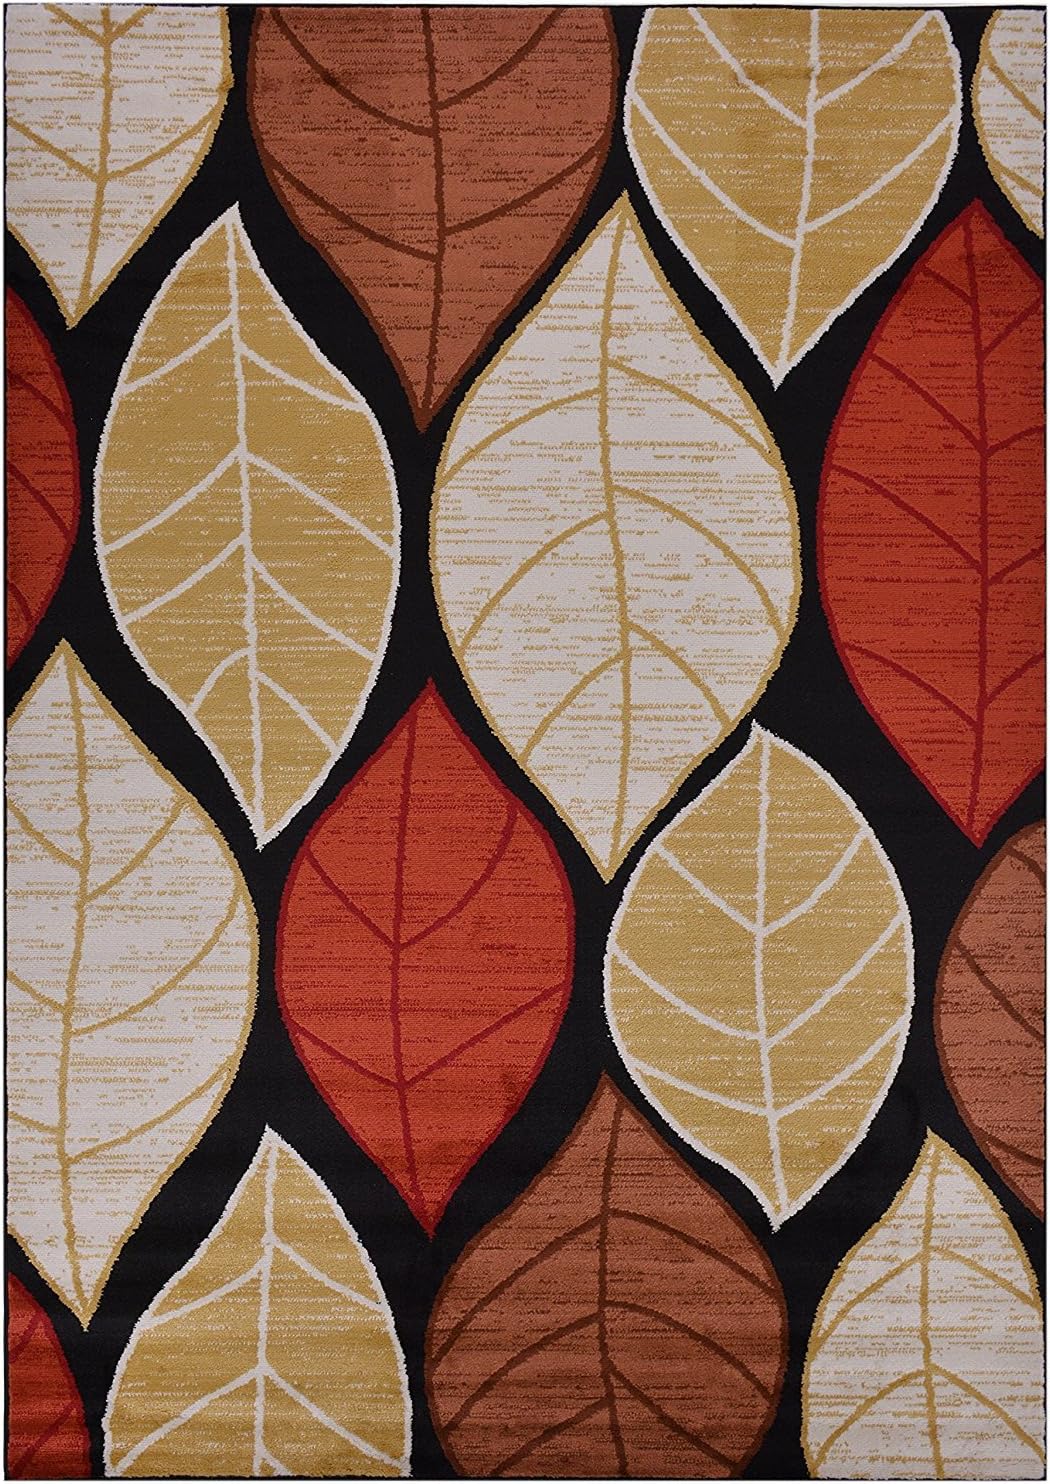 Studio Collection Leaves Black Multi Color Contemporary Design Area Rug (Multi Color Leaves, 5x7)-1